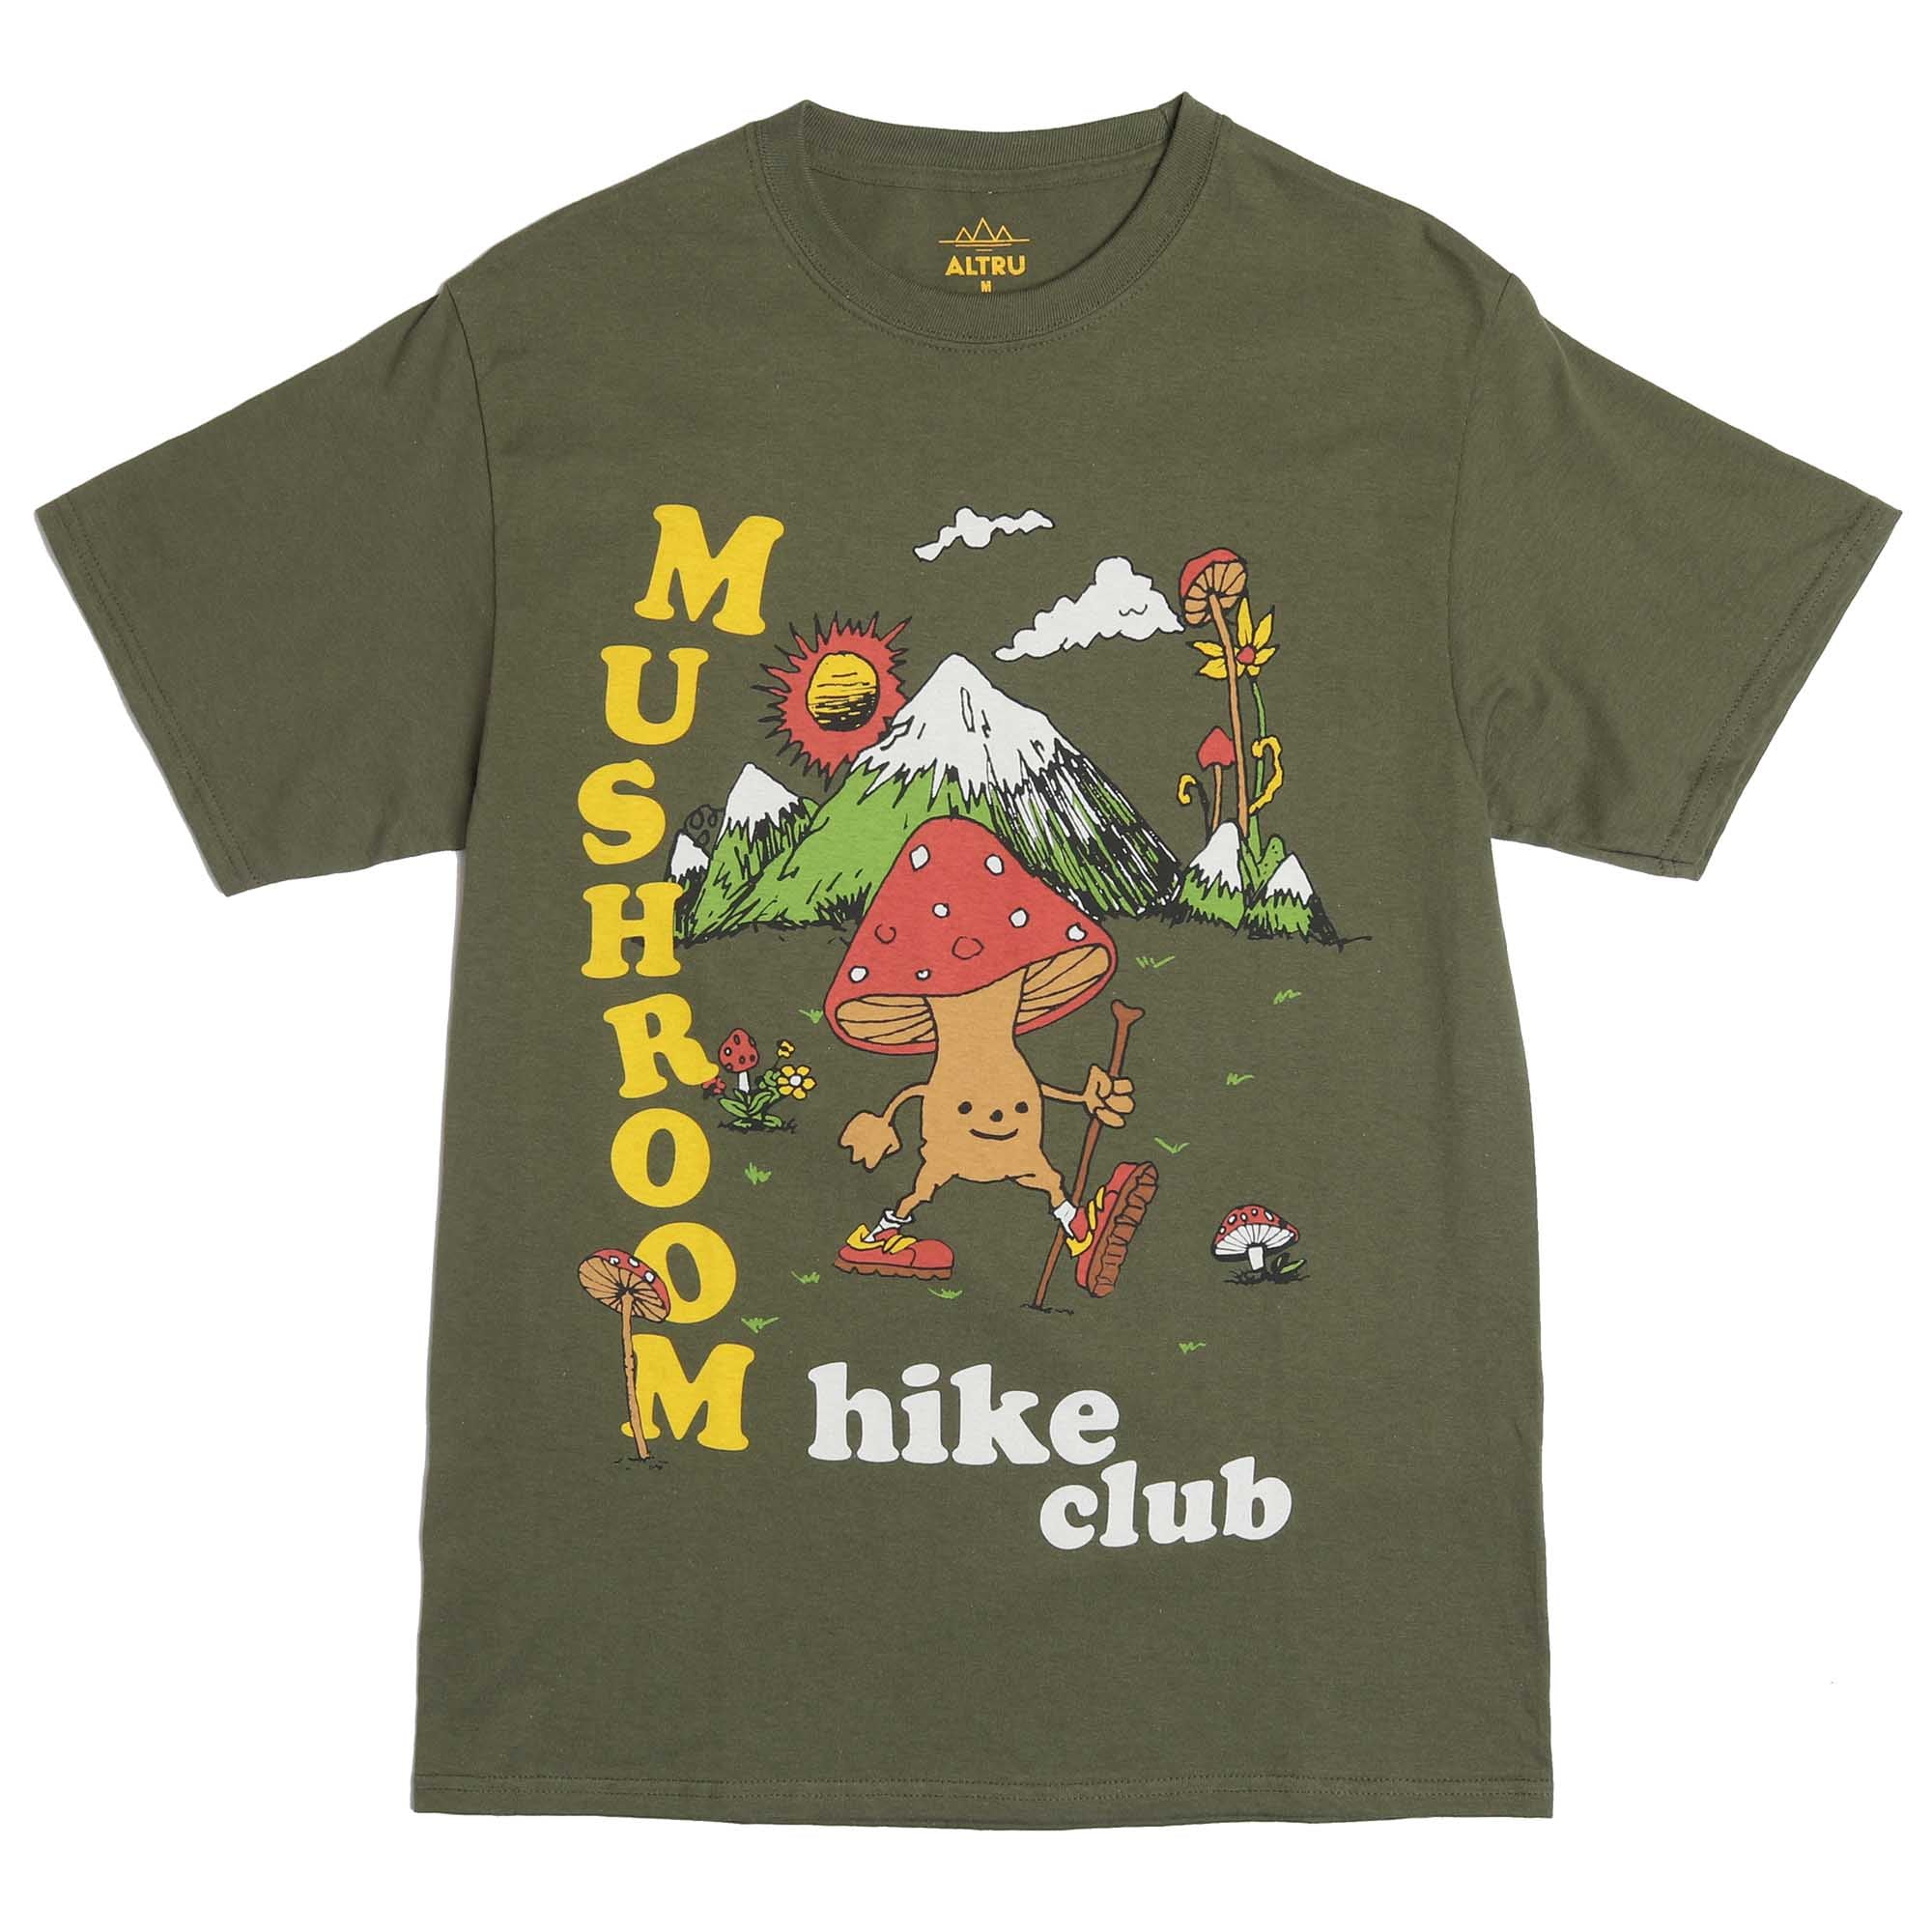 Altru Apparel Men's cotton tee green with mushroom graphics on front